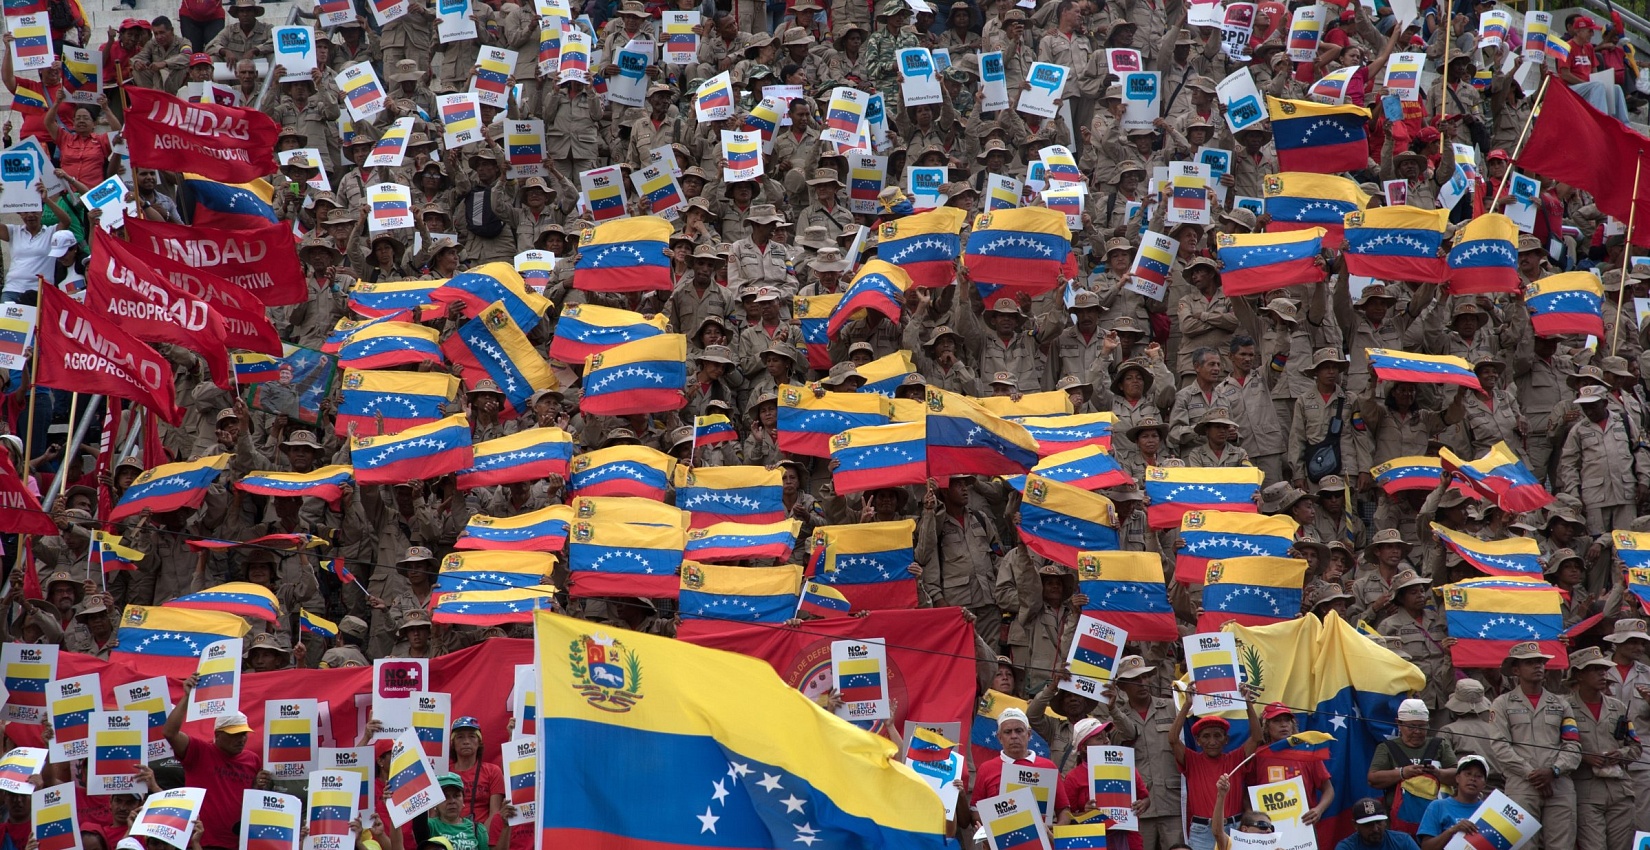 Crowds of the Venezuelan military waving national flags. Photo: Sputnik.